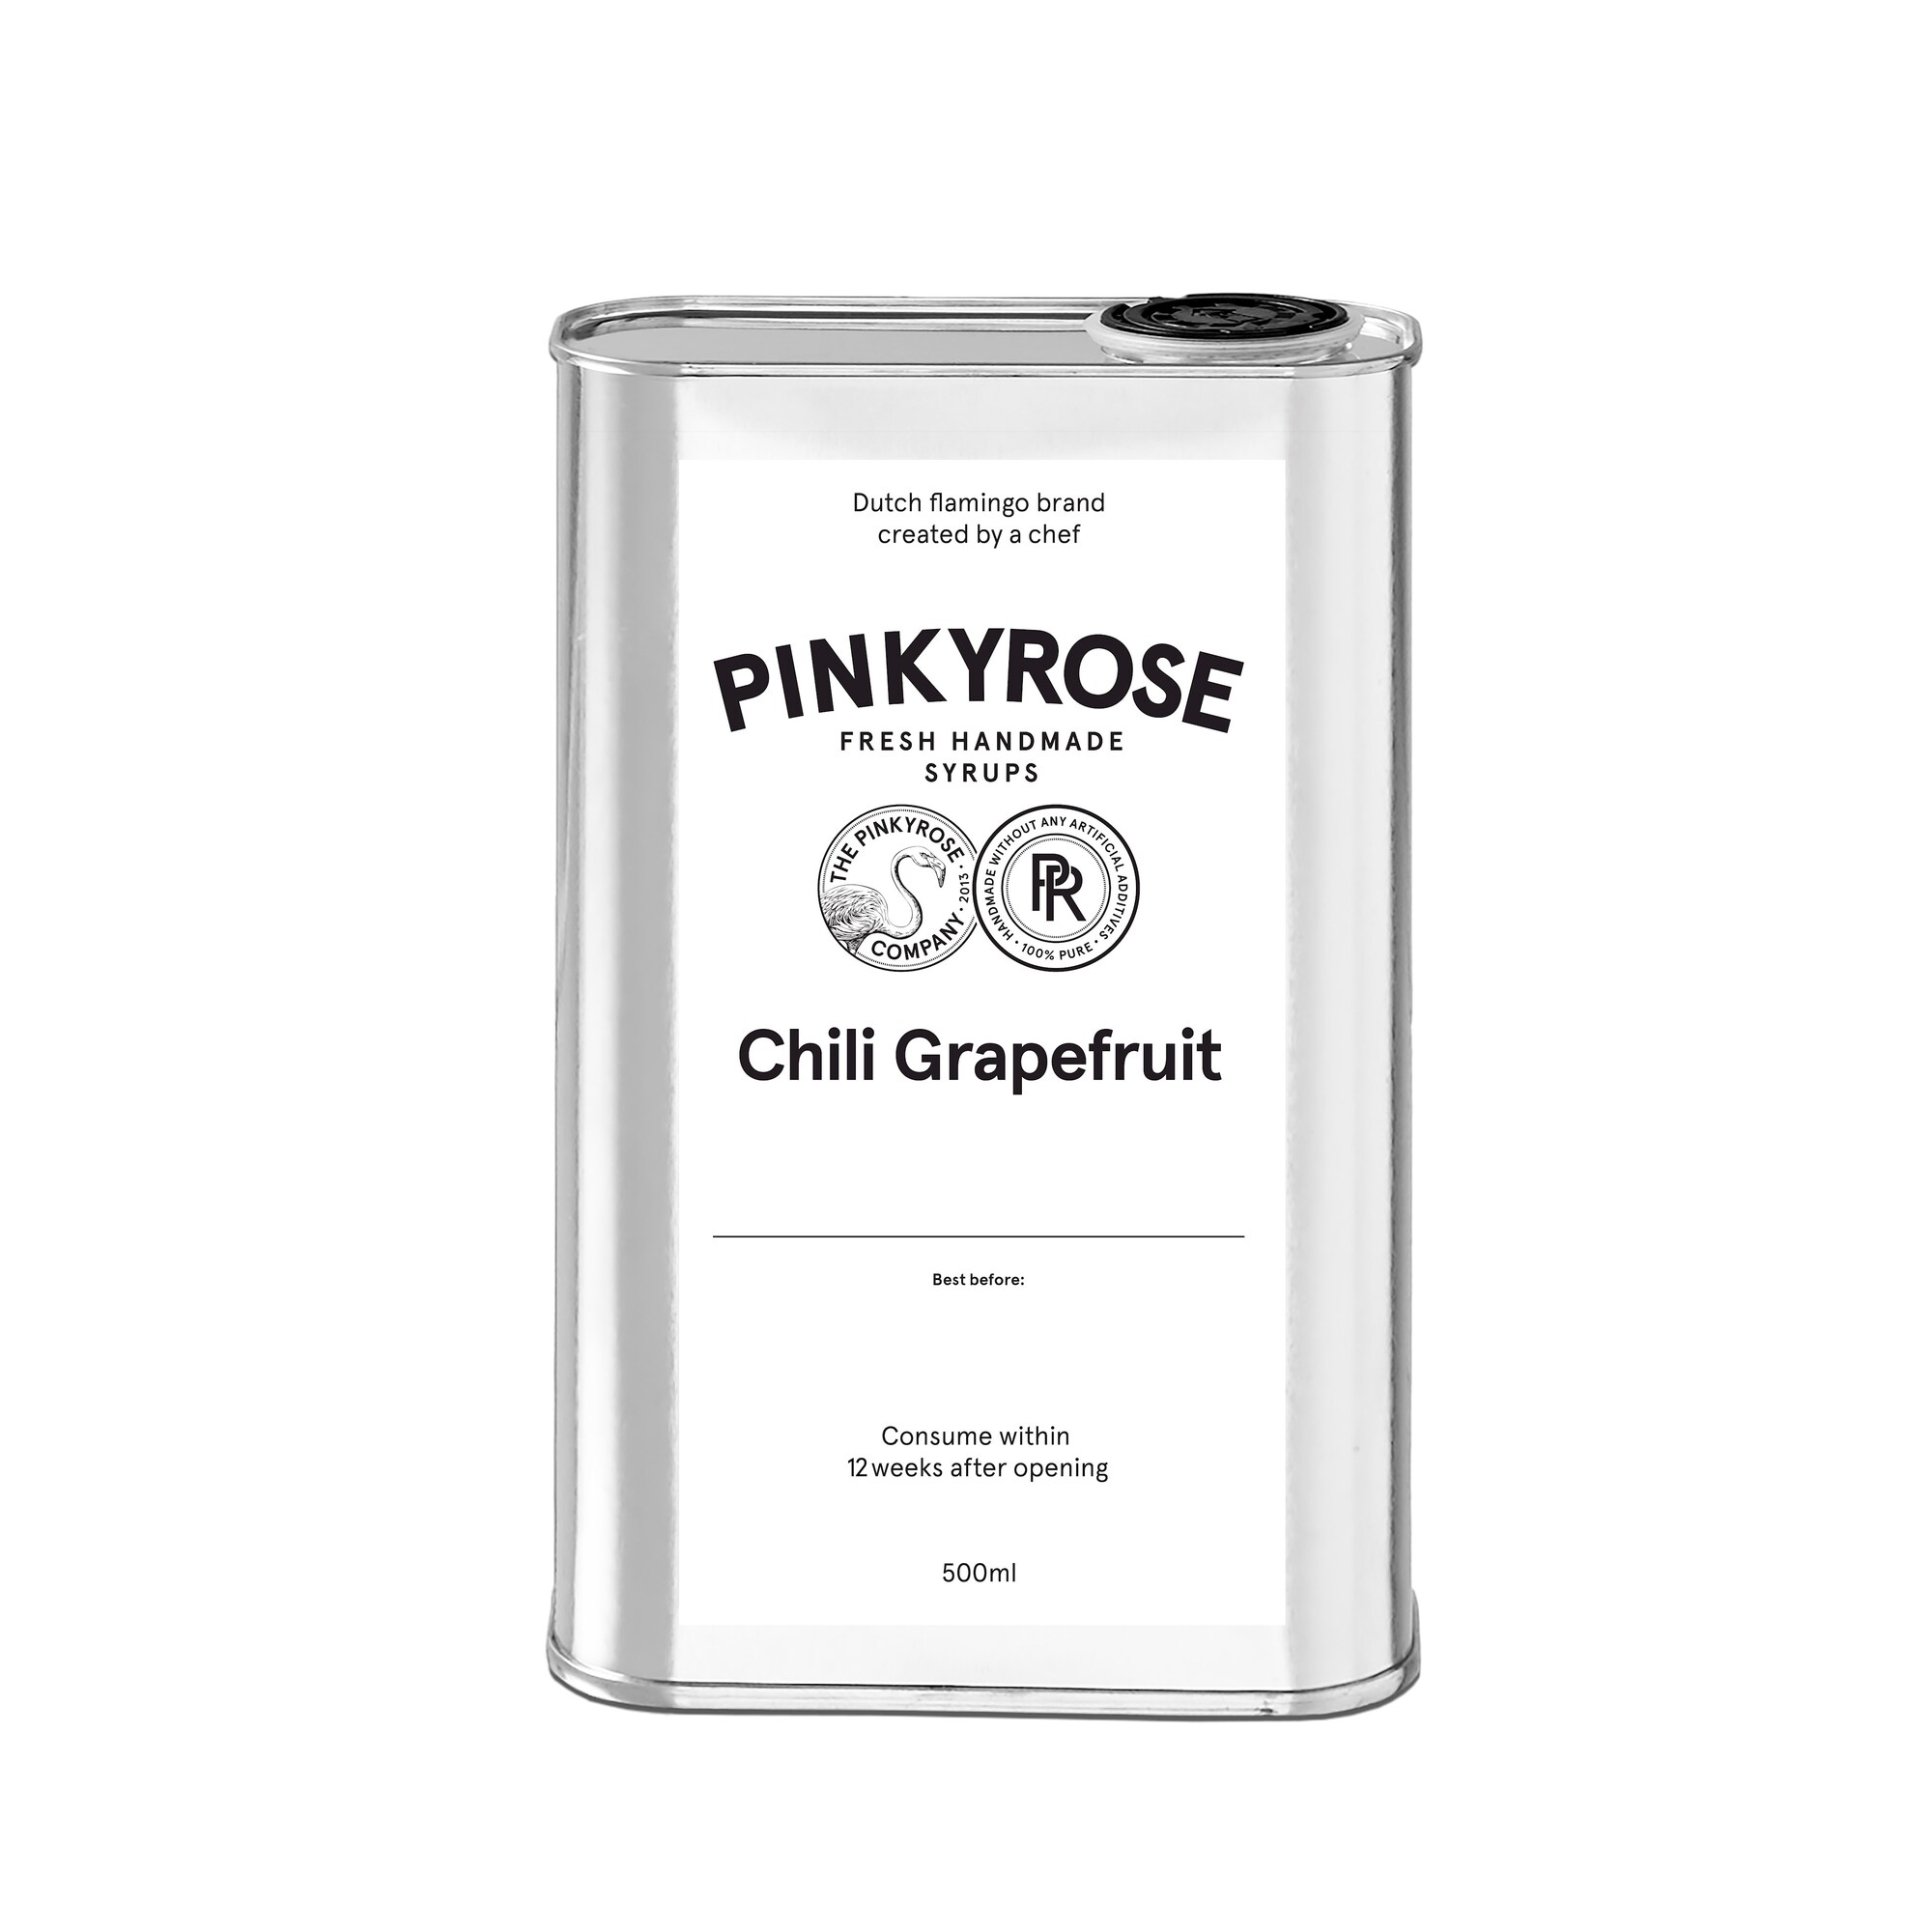 79152 Pinkyrose chili grapefruit siroop blik 6x500 ml